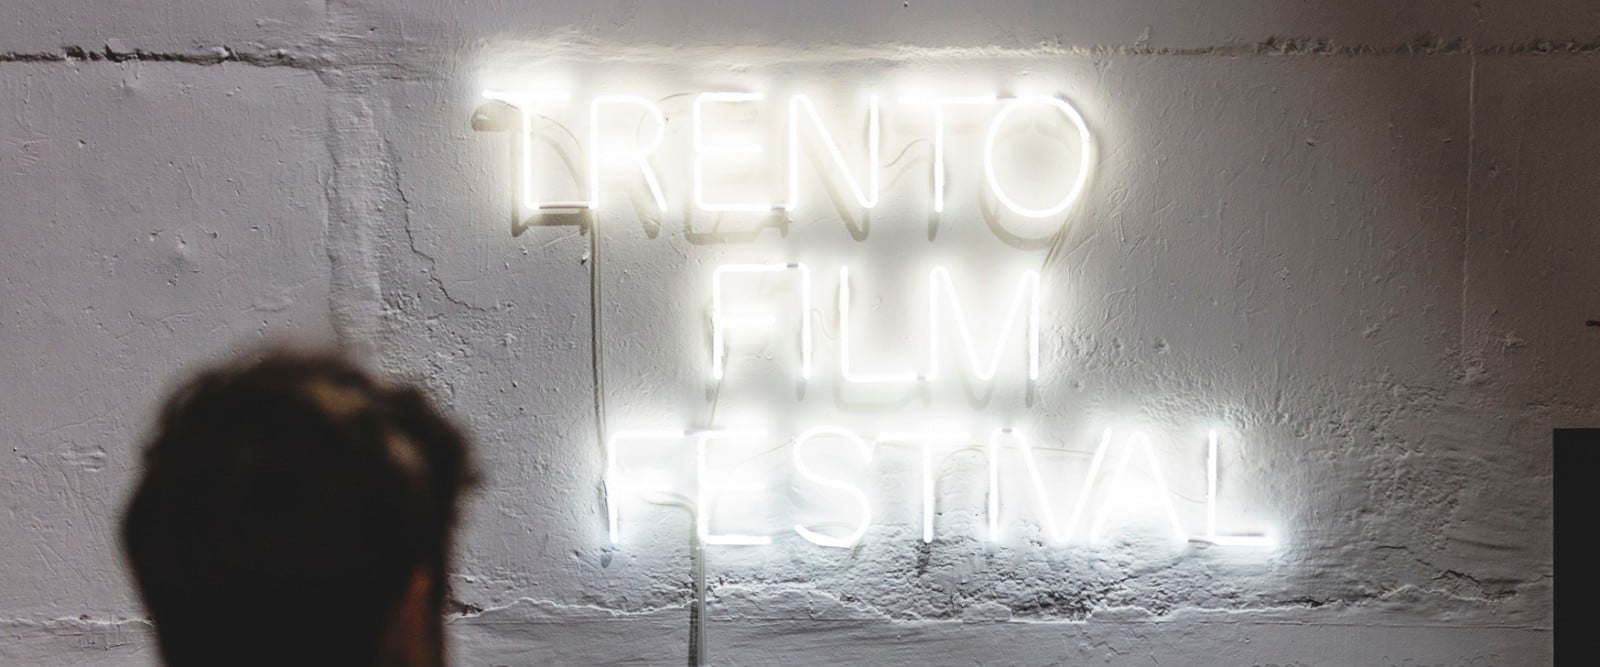 Trento Film Festival 2023